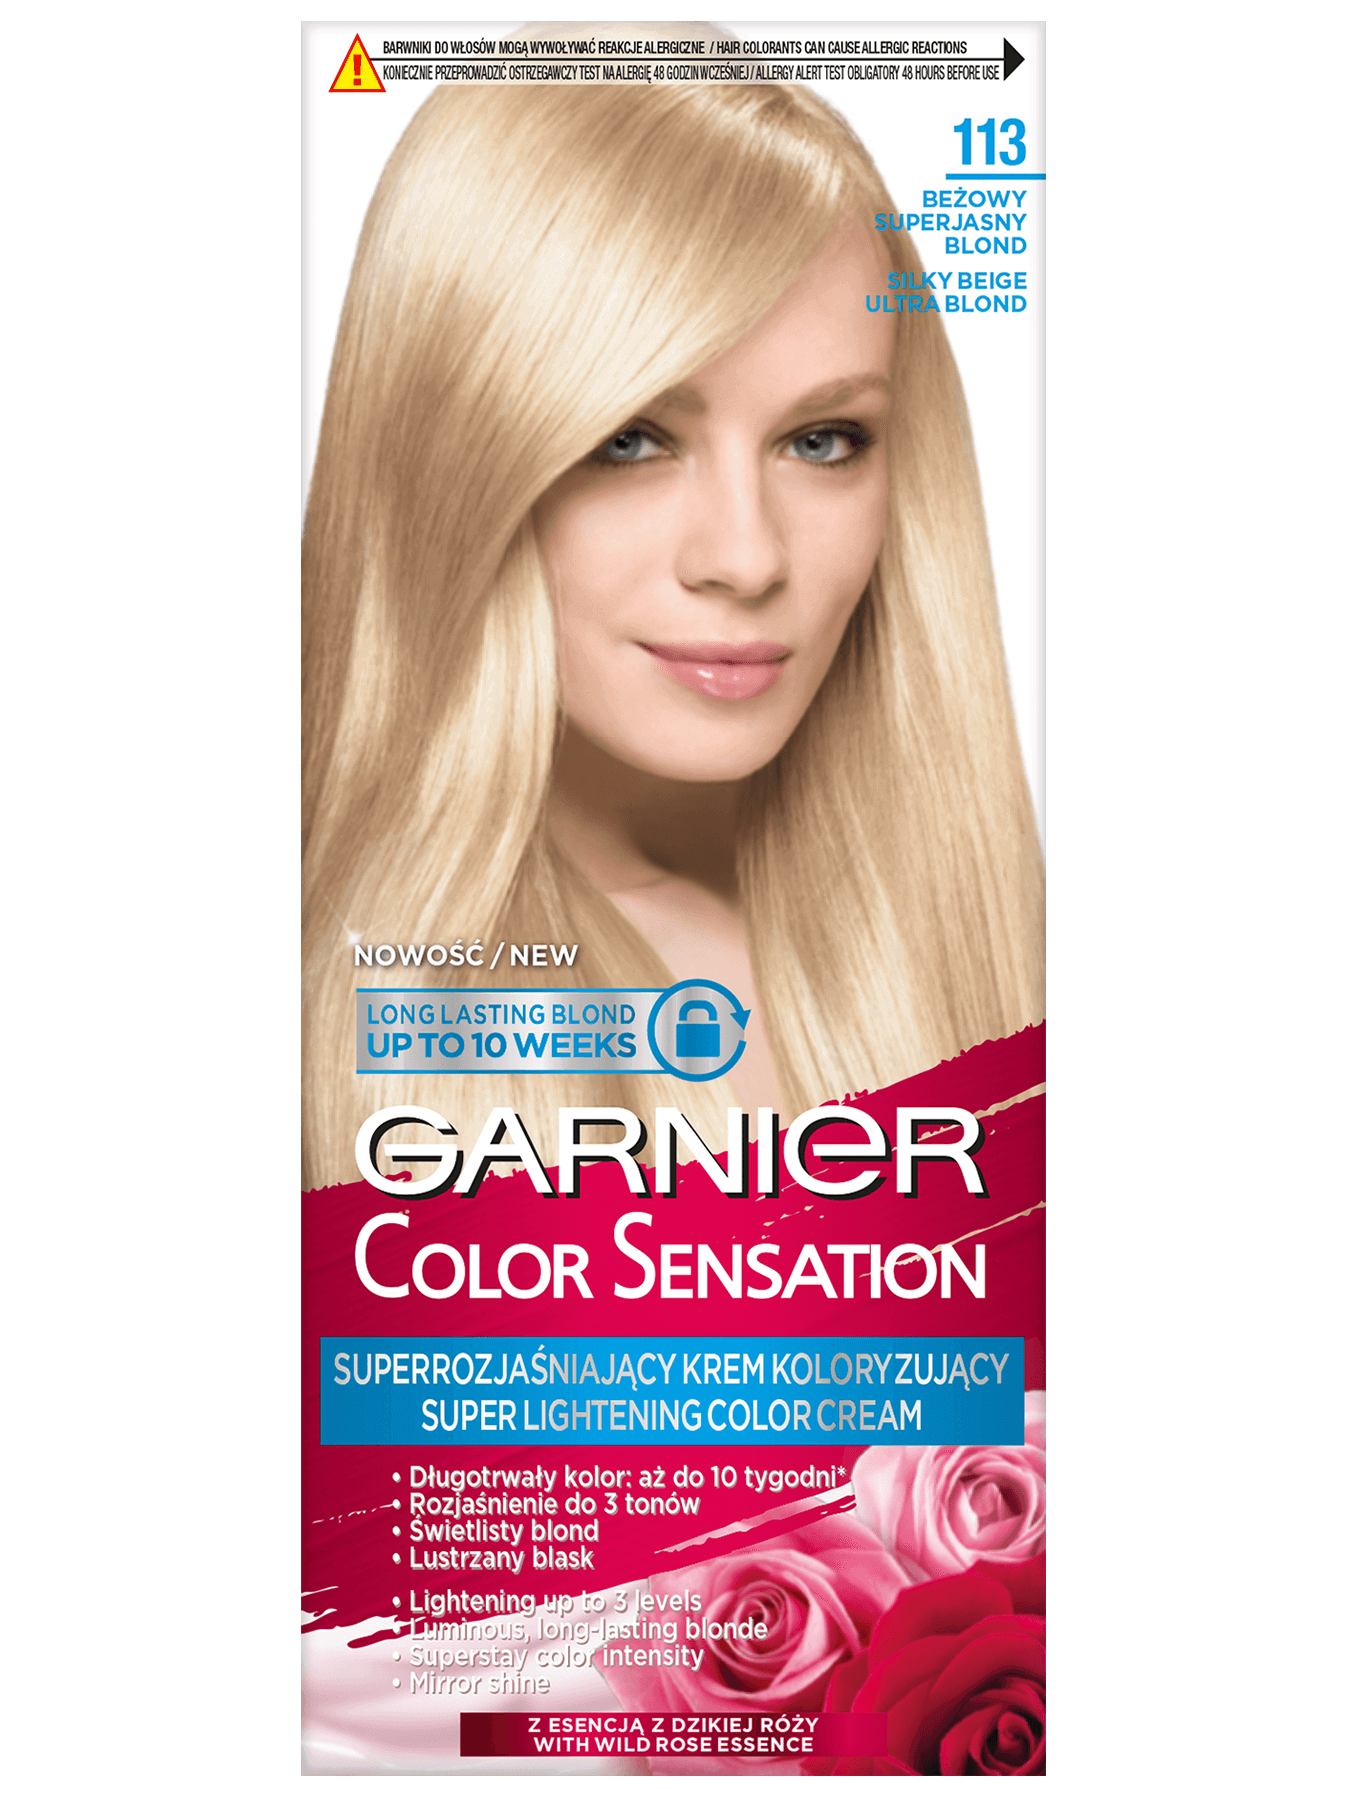 garnier color sensation 1 1 3 jedwabisty bezowy superjasny blond 1350x1800